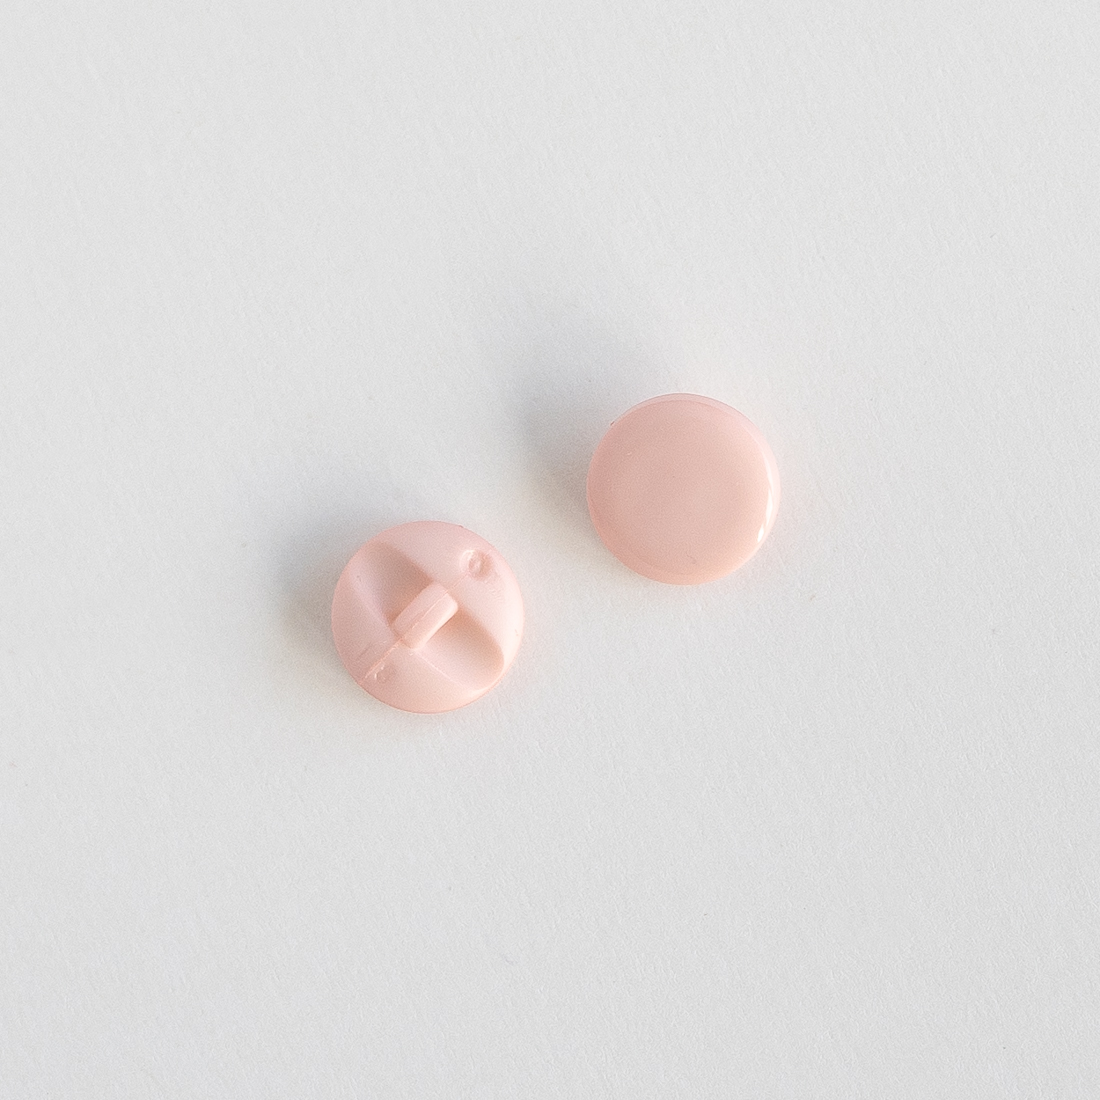  - Kids button | Pink shank button for knitwear - by HipKnitShop - 02/10/2019